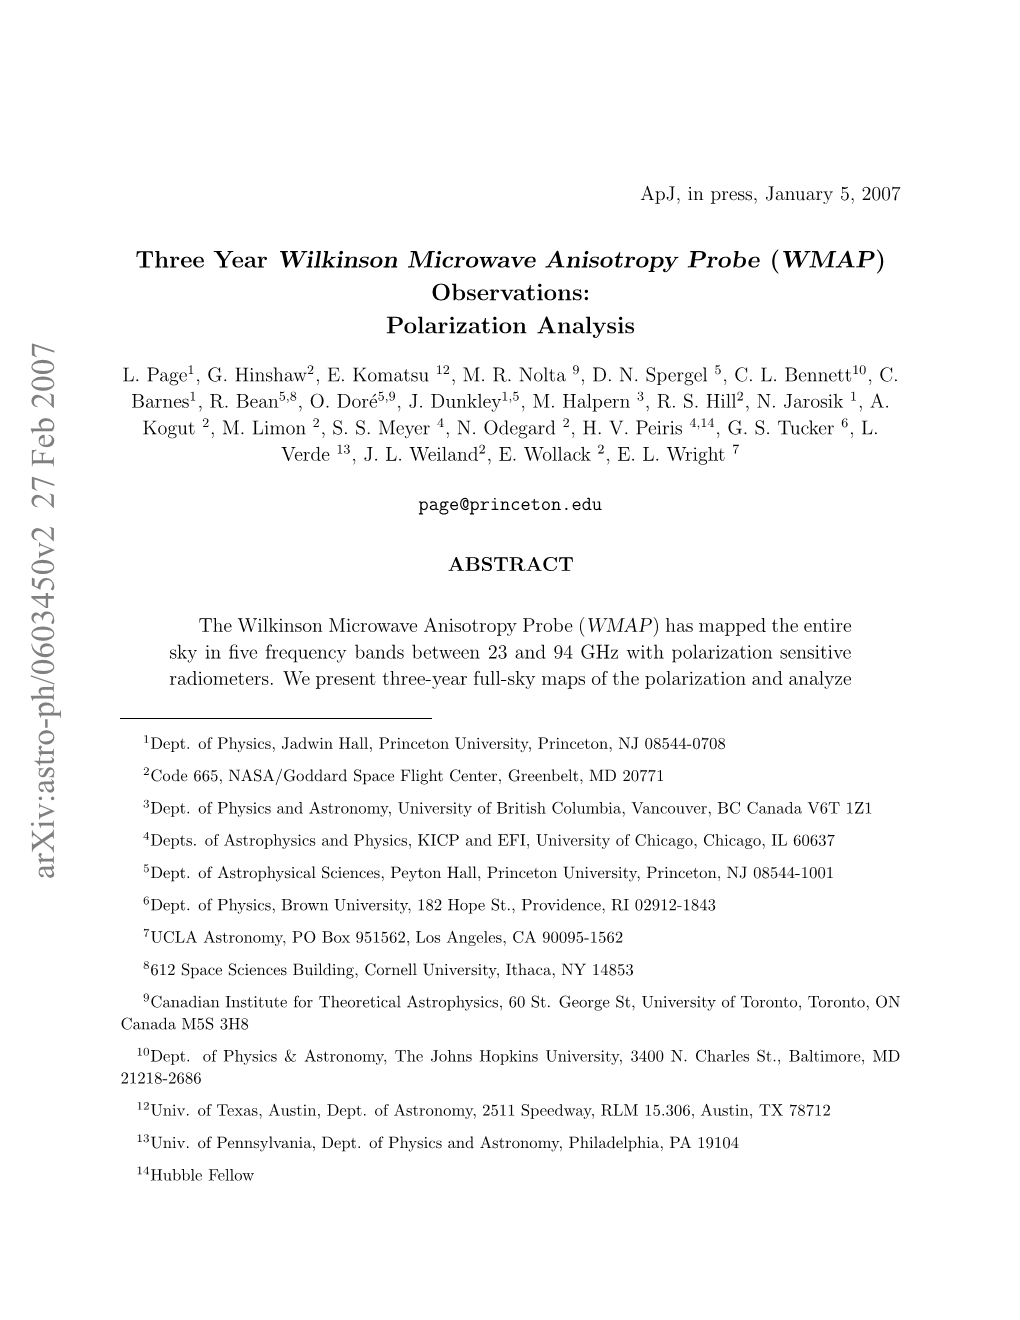 Three Year Wilkinson Microwave Anisotropy Probe (WMAP